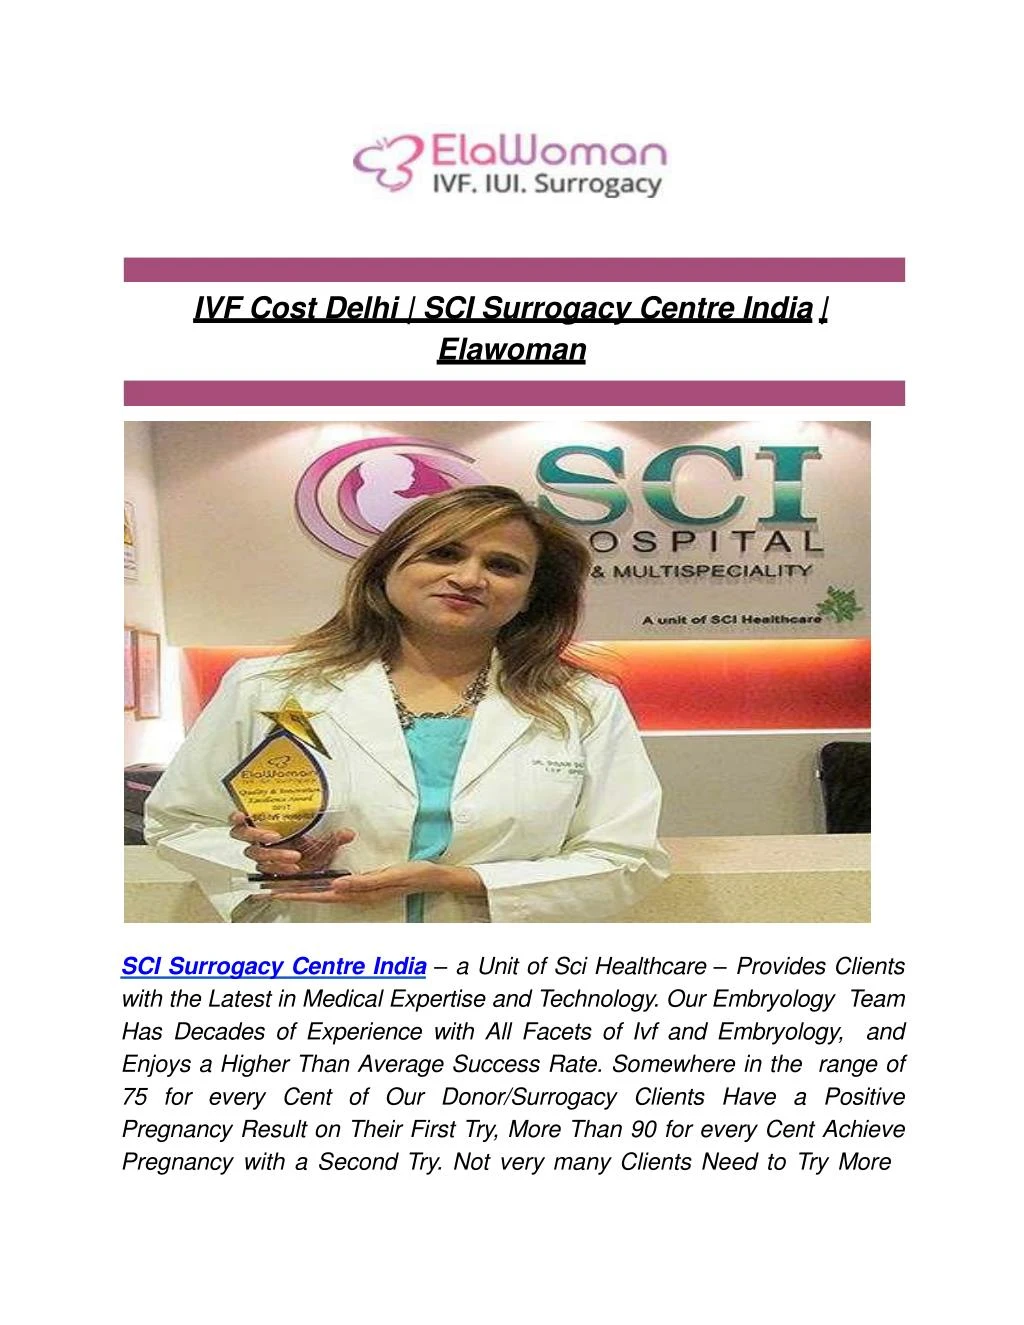 ivf cost delhi sci surrogacy centre india elawoman